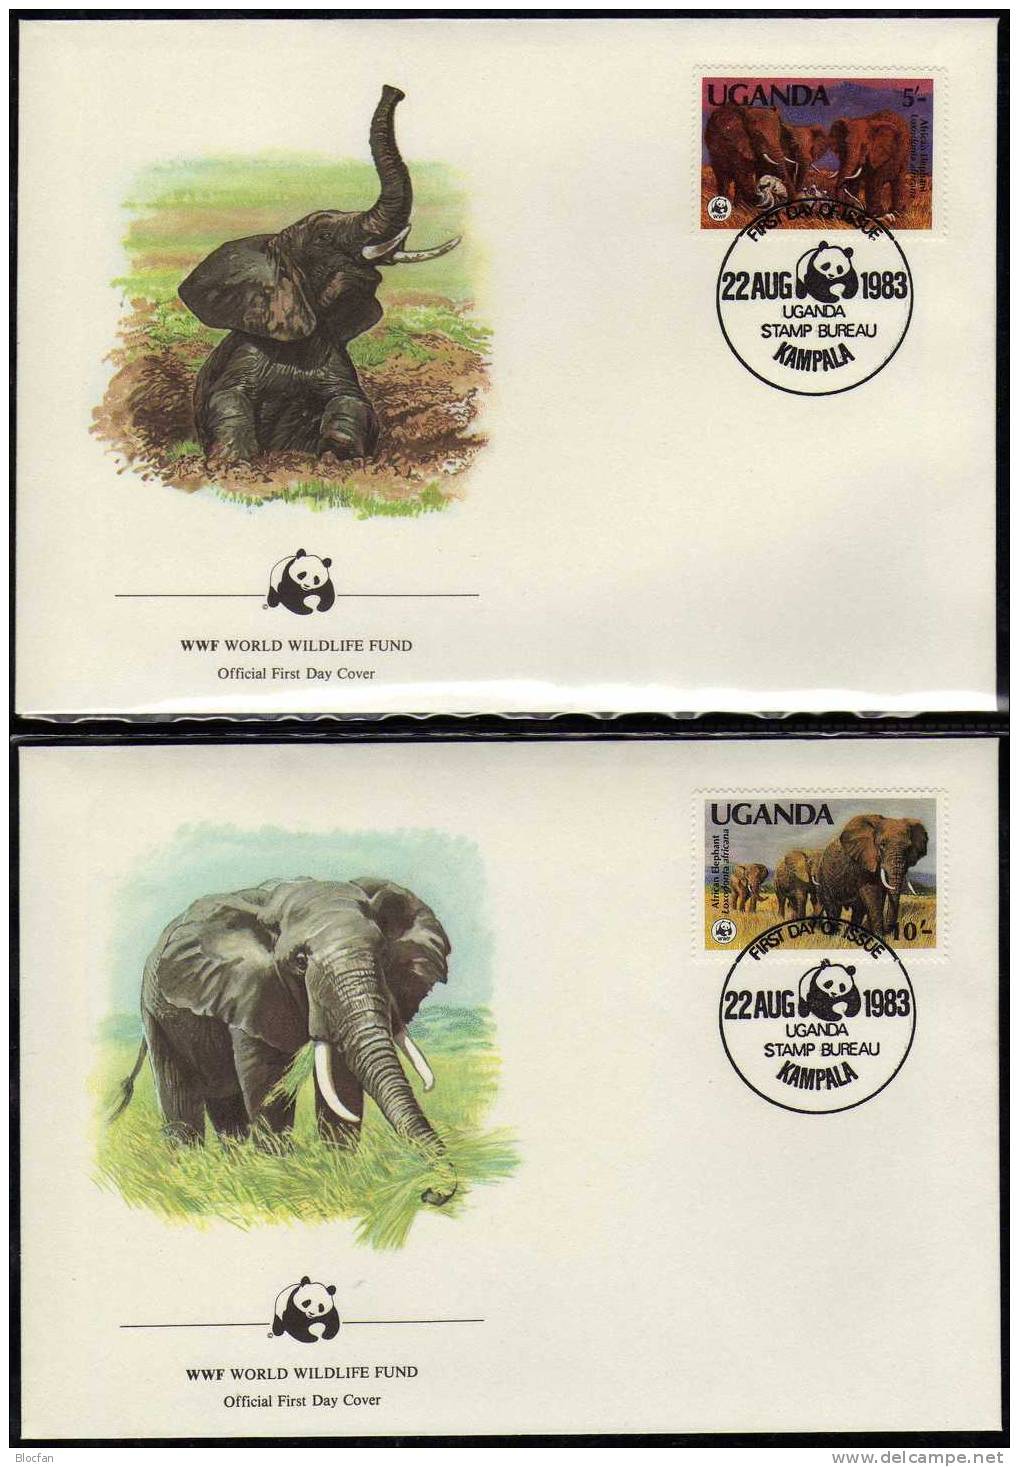 WWF Elefanten in Afrika Uganda 361/4 ** plus FDC 43€